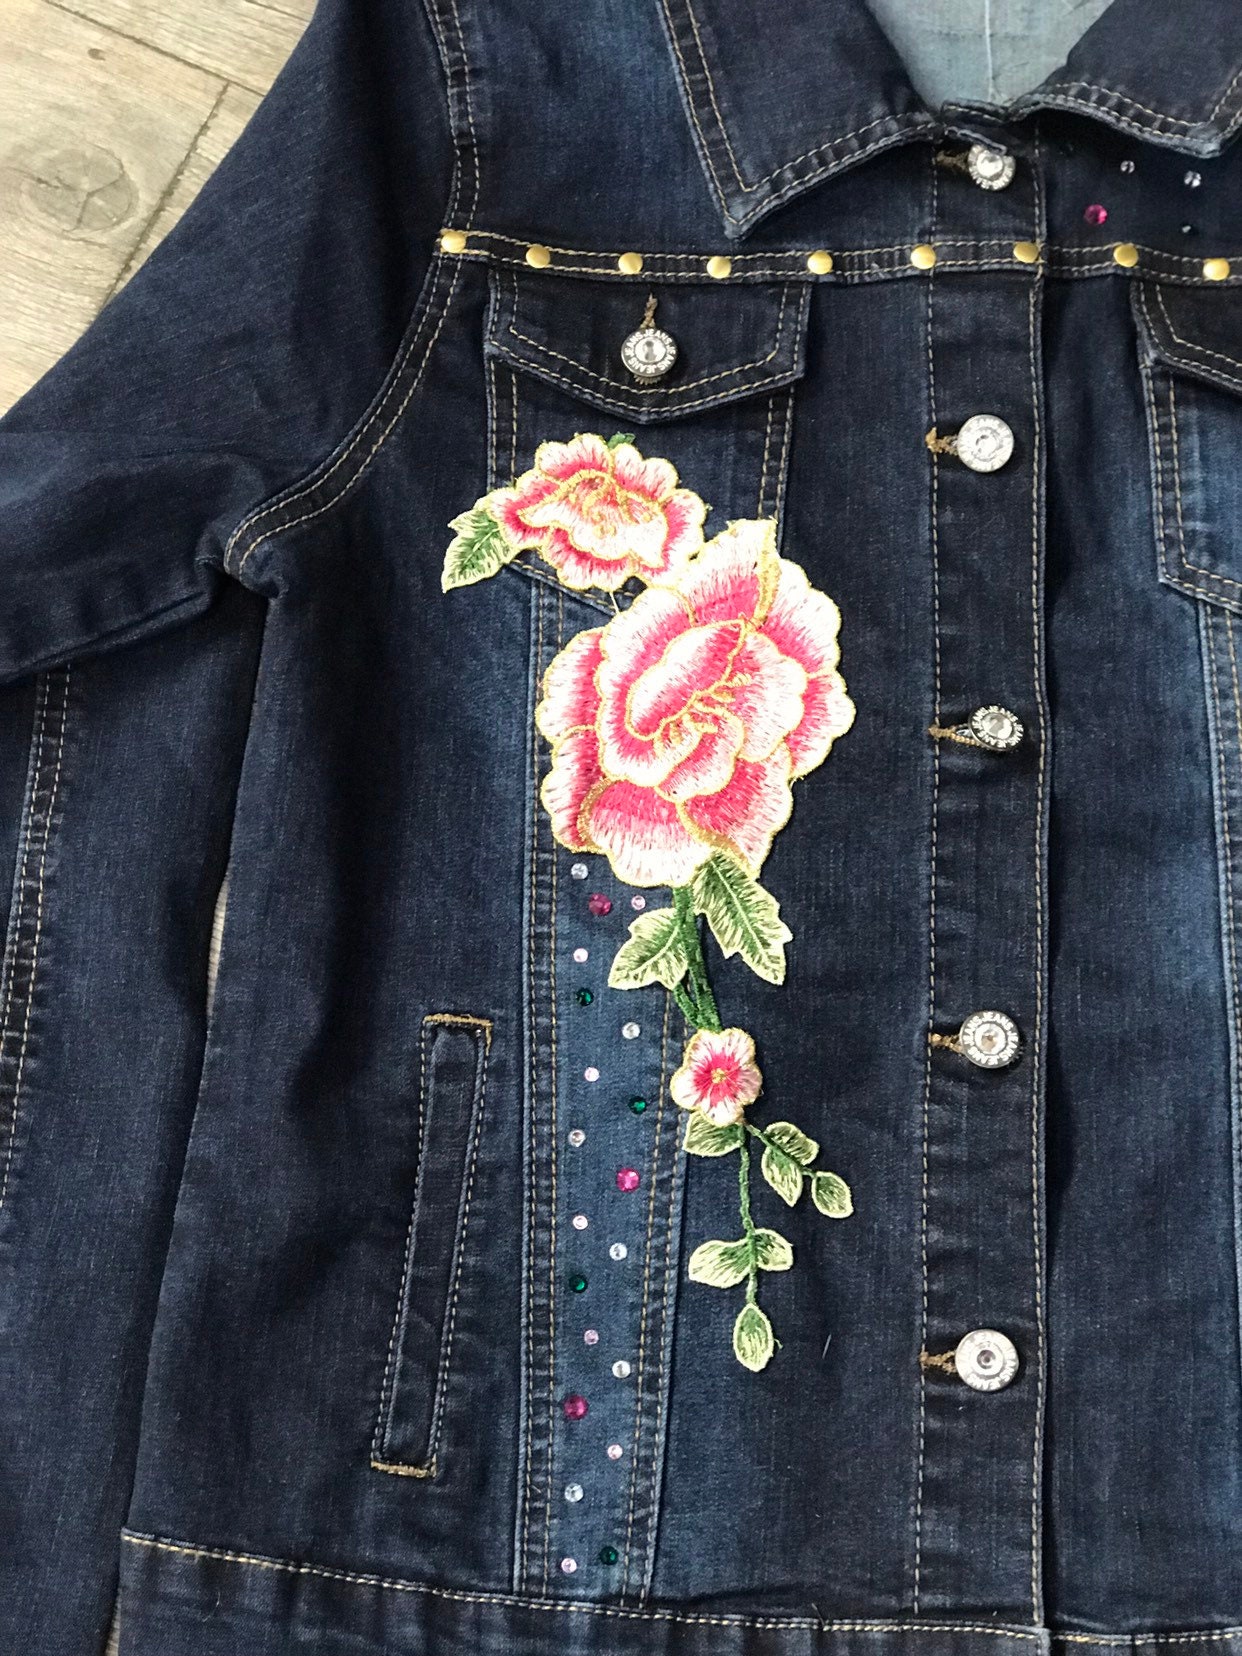 Women's Denim Jacket With Flowers and Rhinestones - Etsy